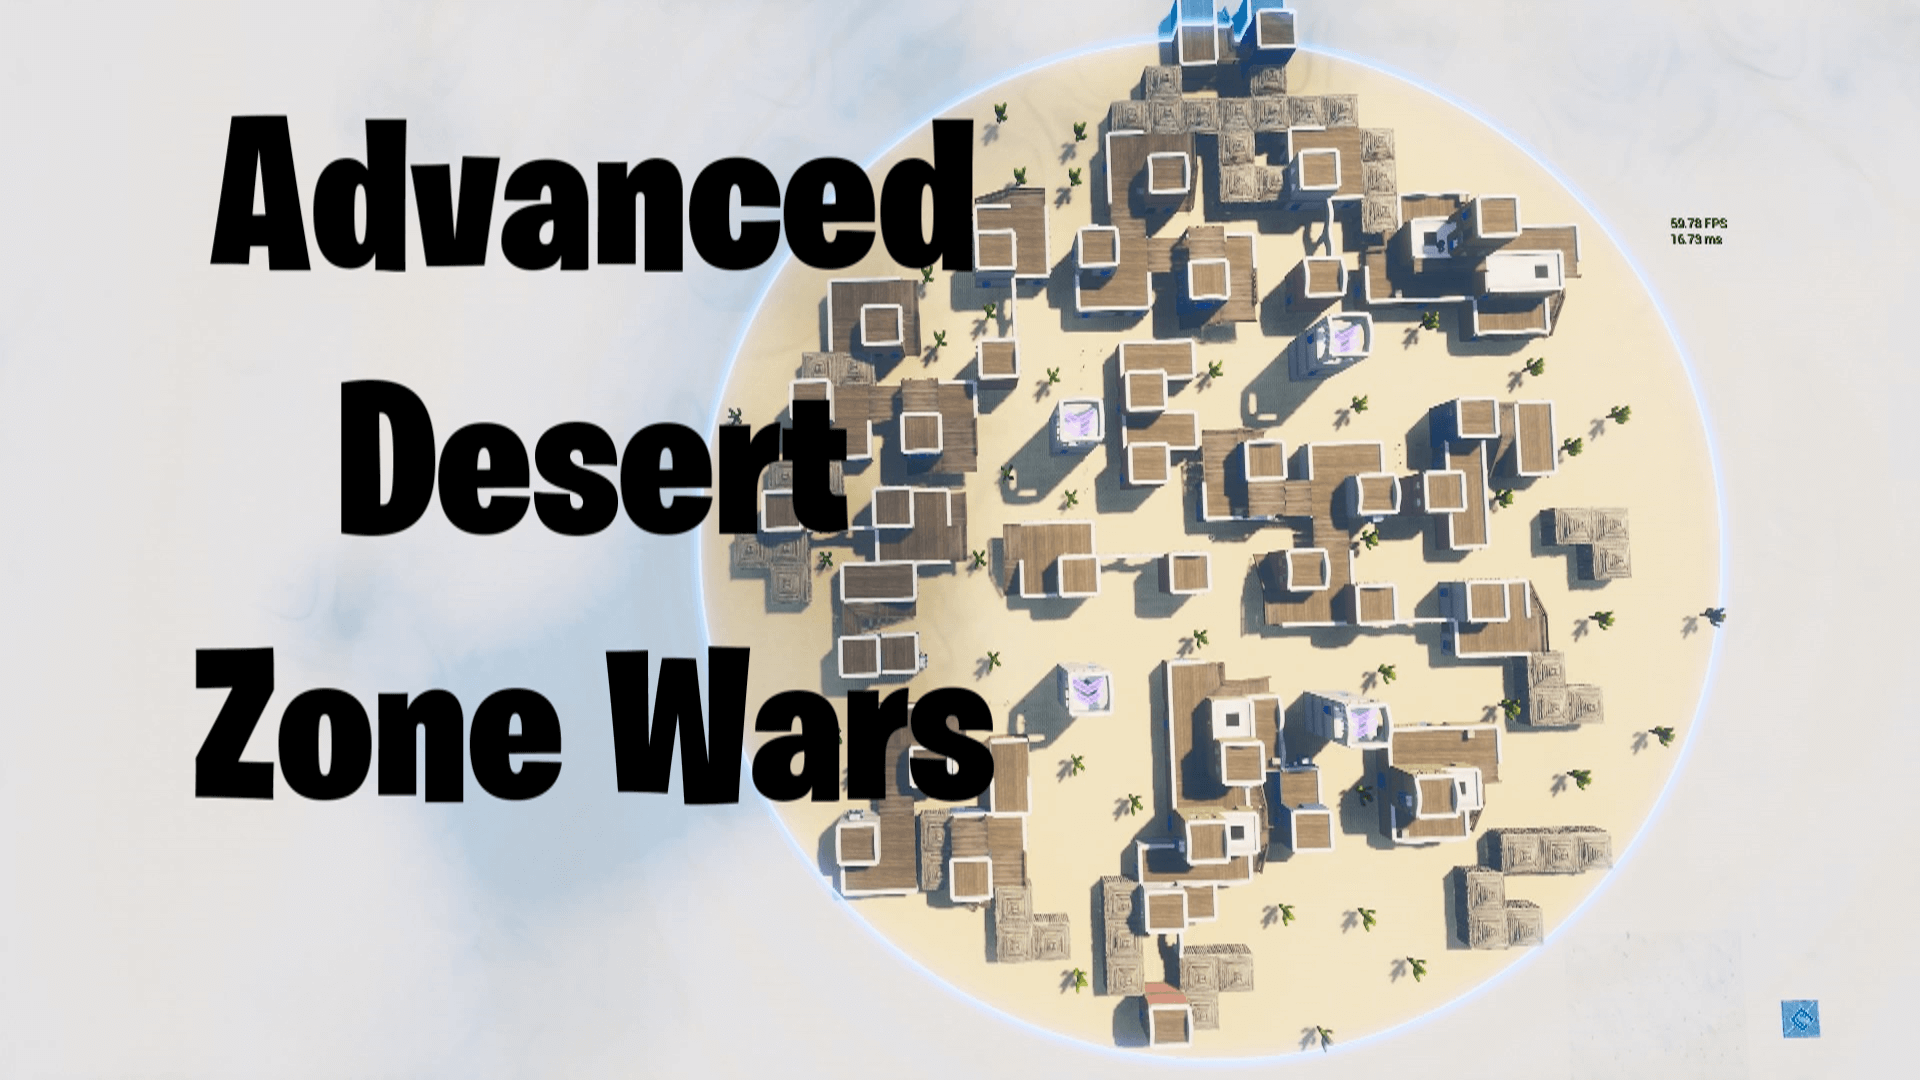 ADVANCED DESERT ZONE WARS (V1.0)